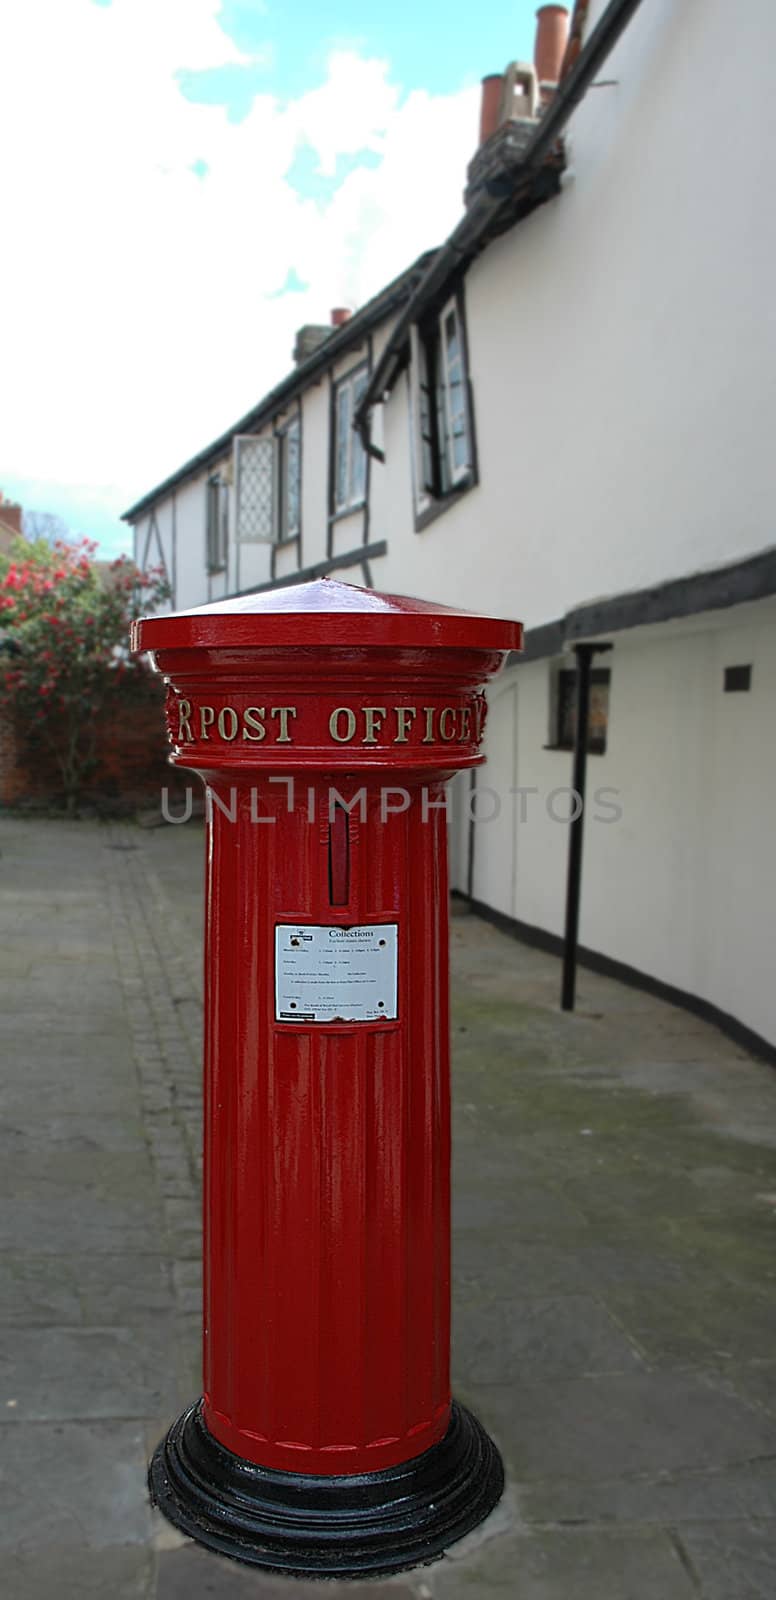 Old British Post Box in a Street Scene